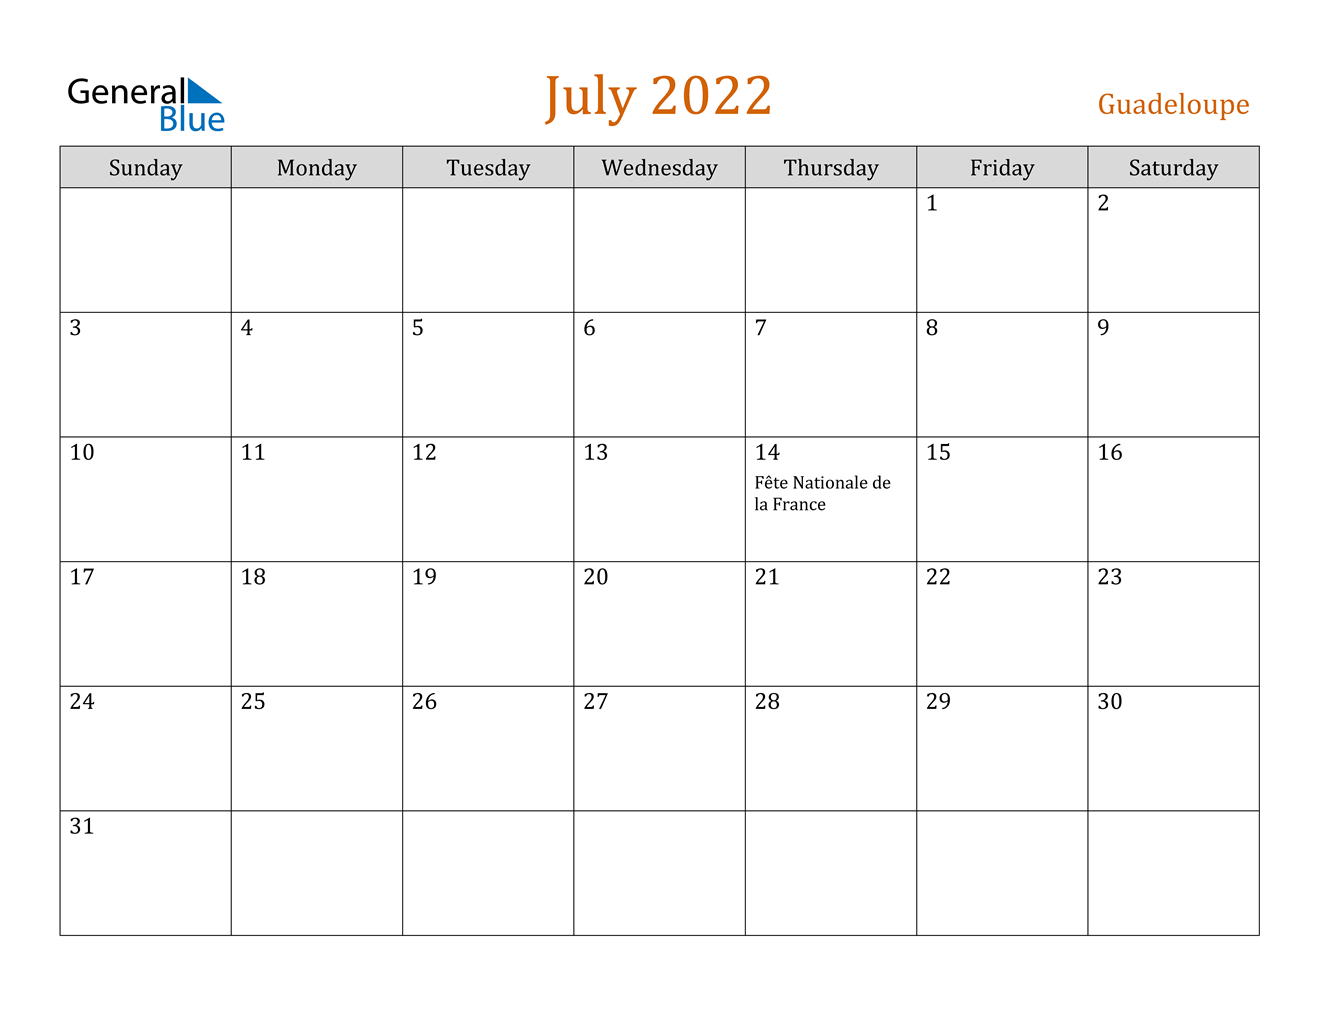 July 2022 Calendar - Guadeloupe